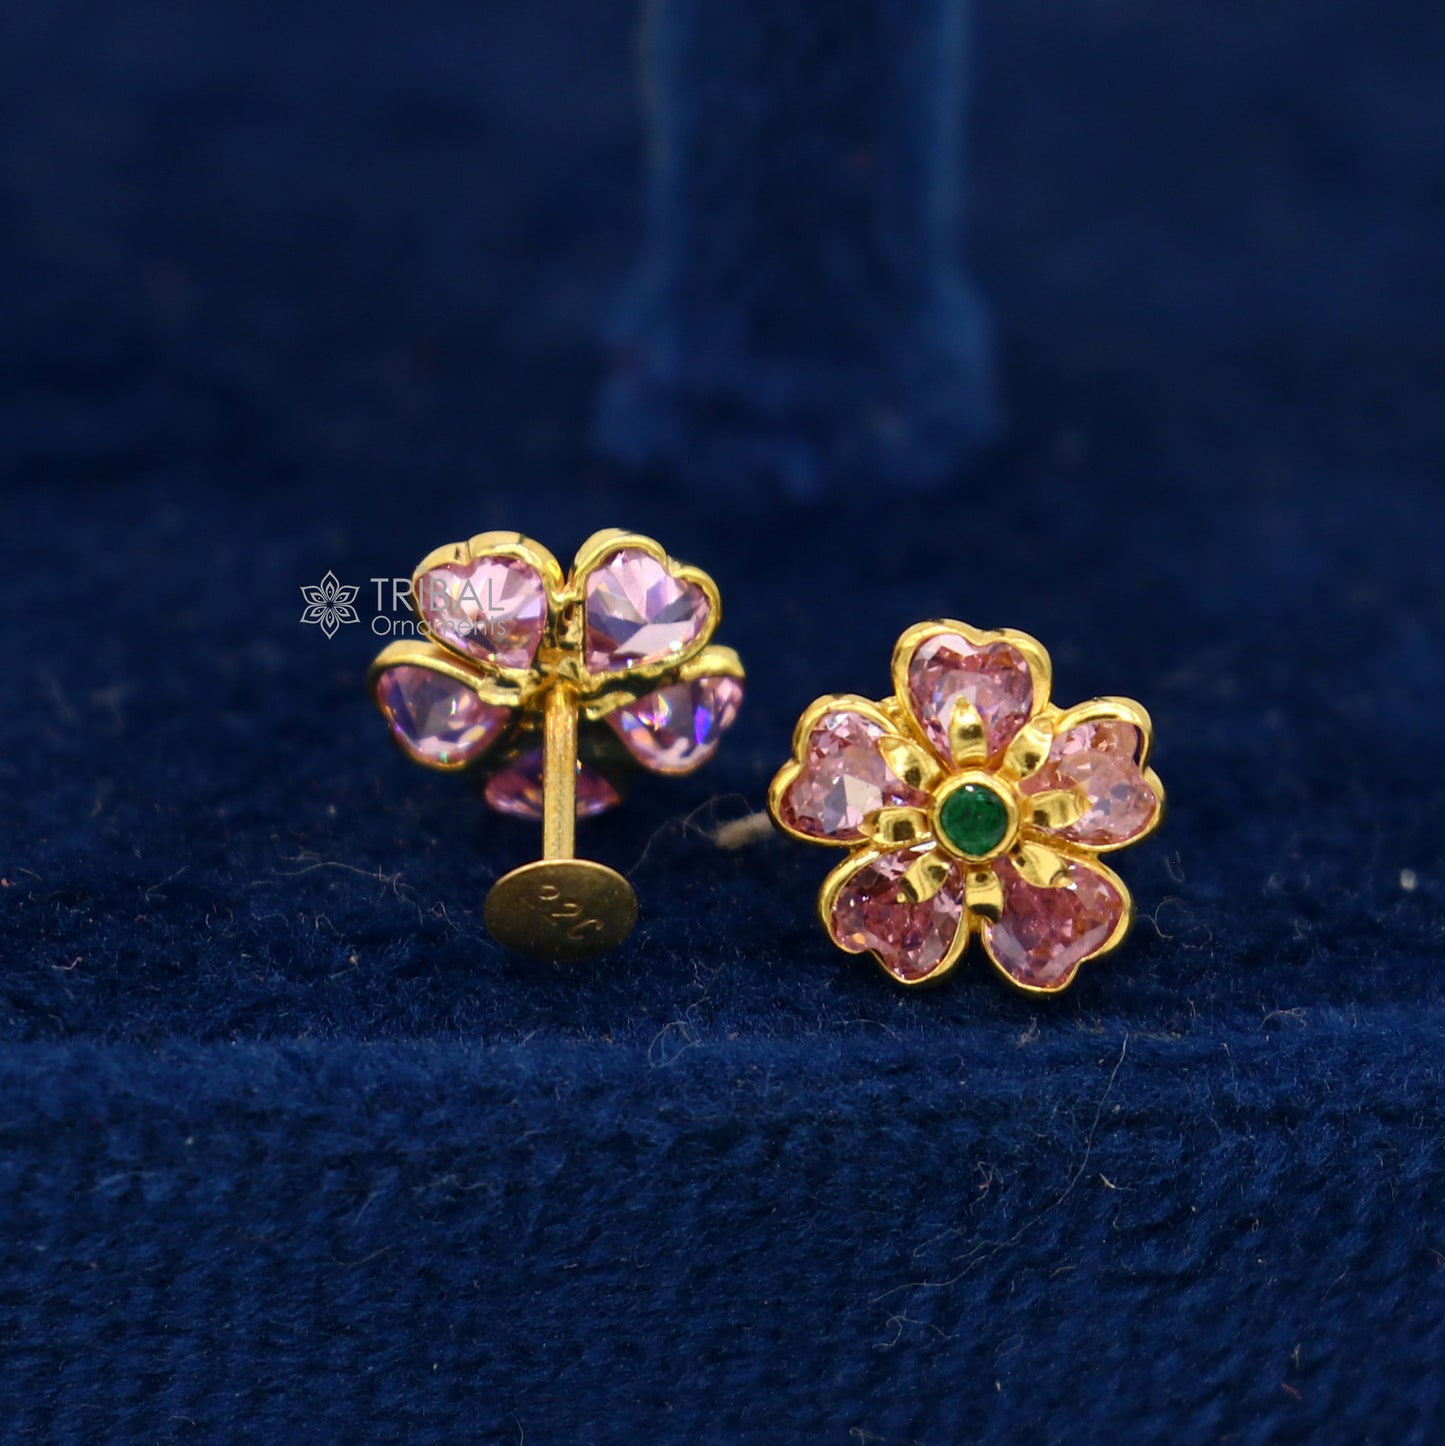 14kt yellow gold handmade fabulous orange Stone excellent vintage flower design stud earrings pair unisex jewelry er175 - TRIBAL ORNAMENTS